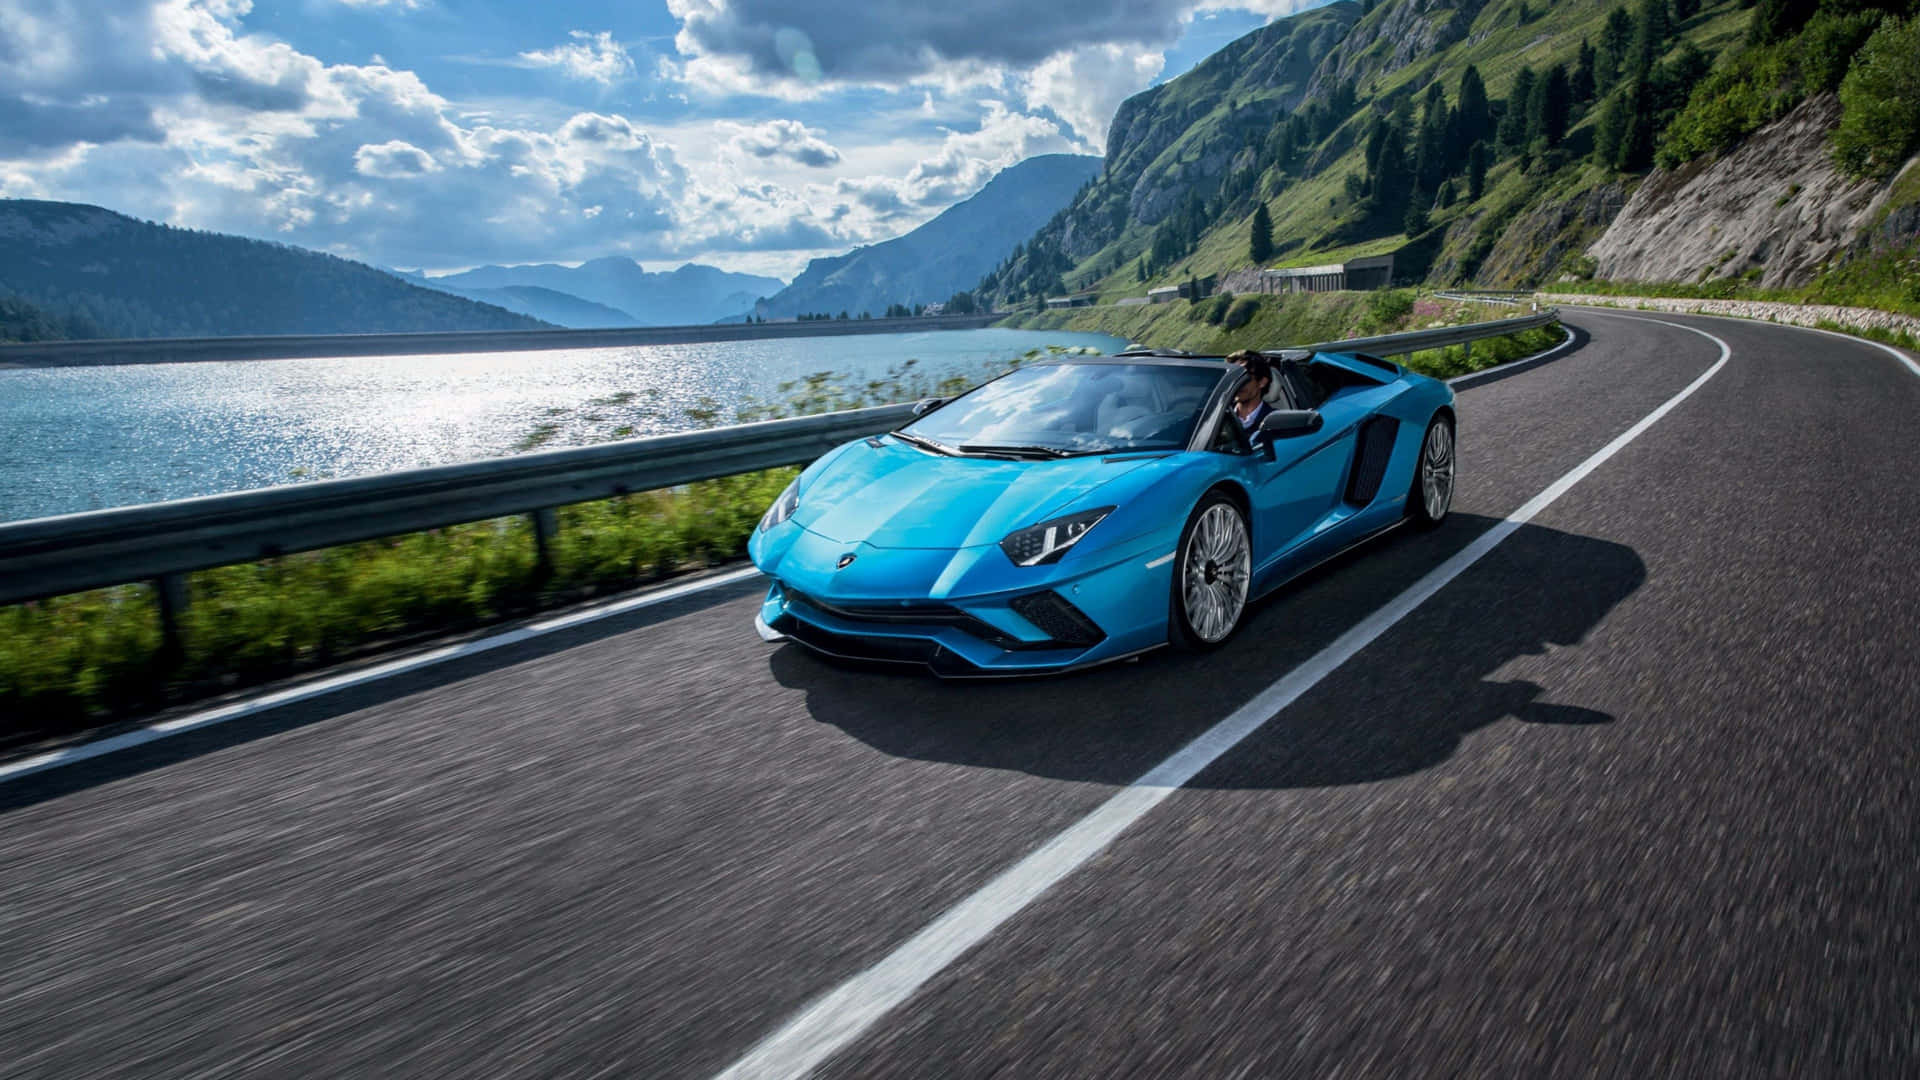 Enlyxig Lamborghini Skiner Klart I 4k-upplösning.